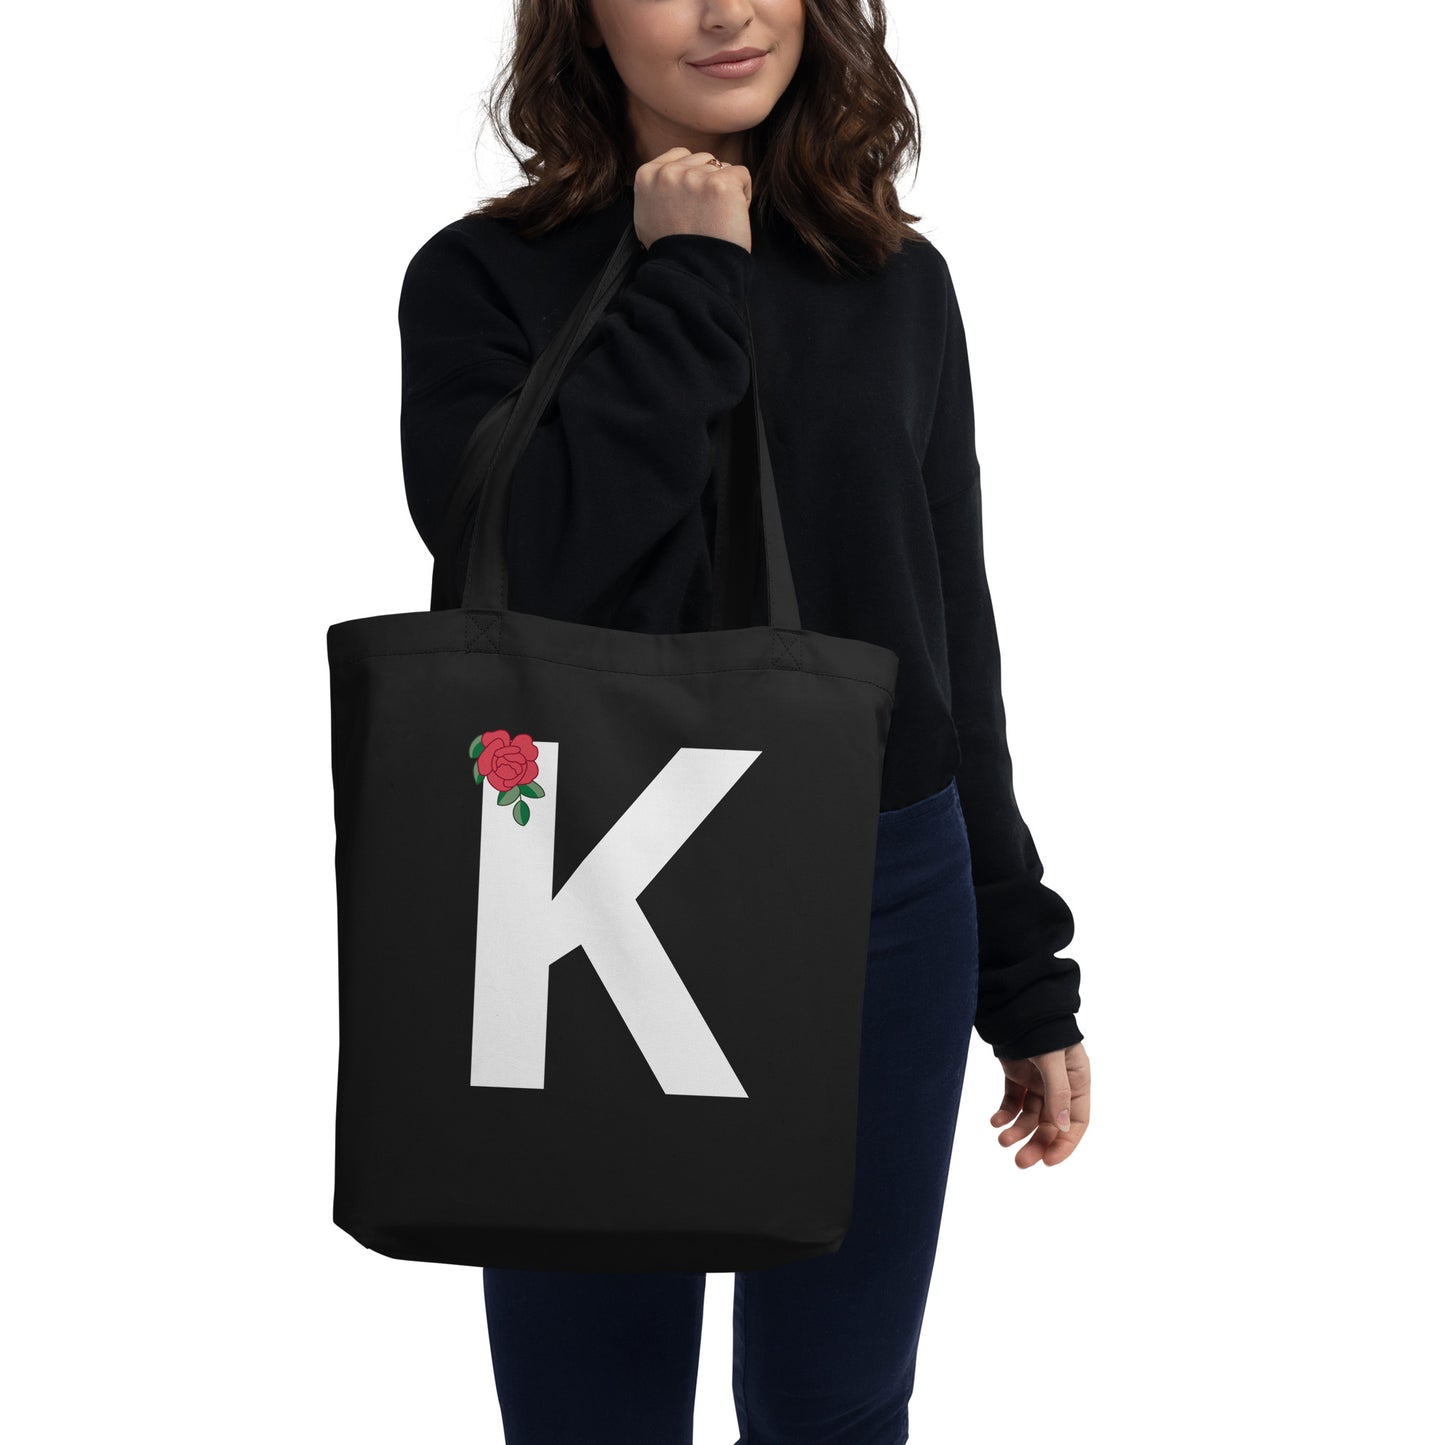 Letter "K" Eco Tote Bag